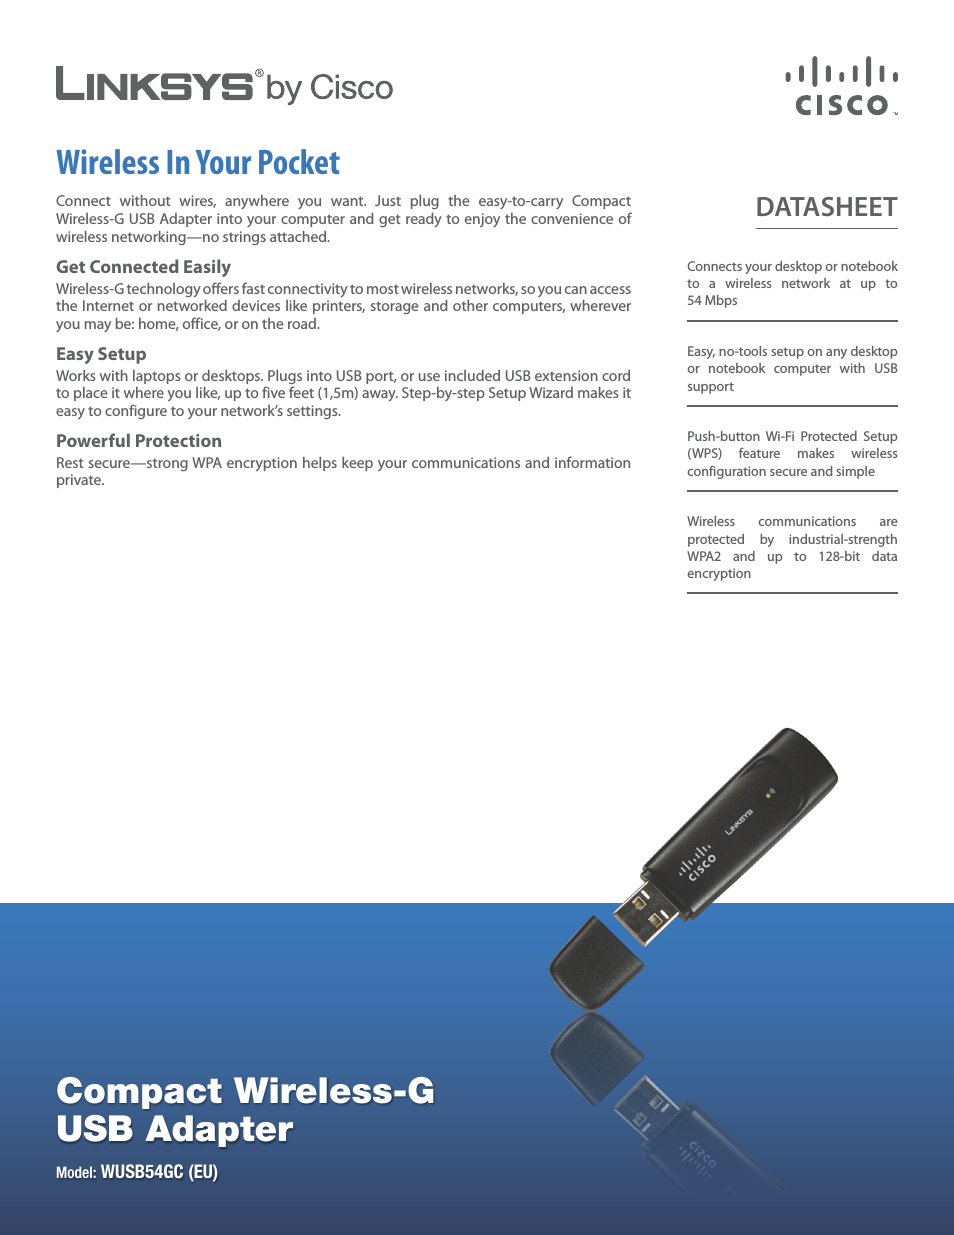 Compact Wireless-G USB Adapter WUSB54GC